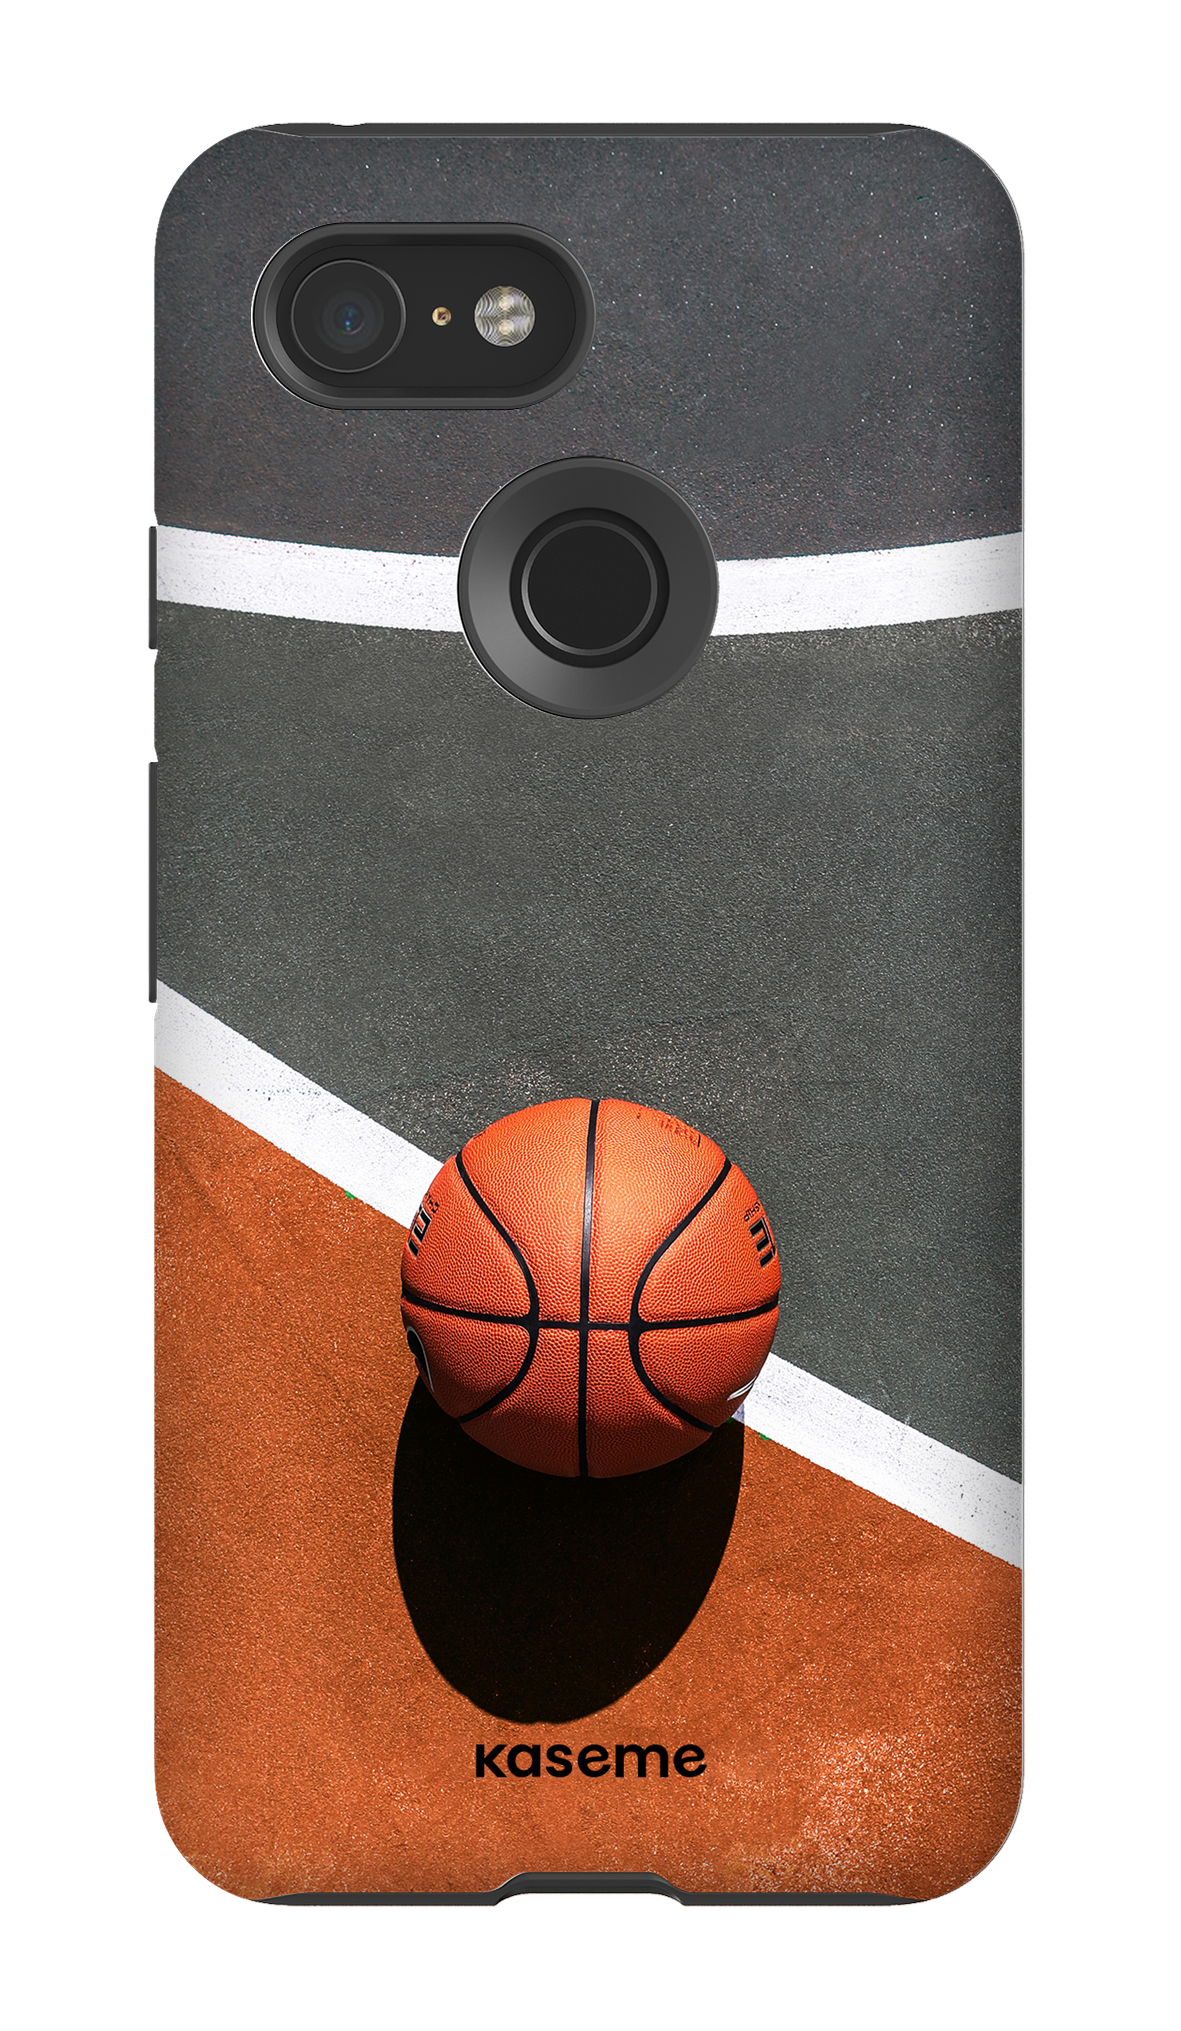 Baller - Google Pixel 3